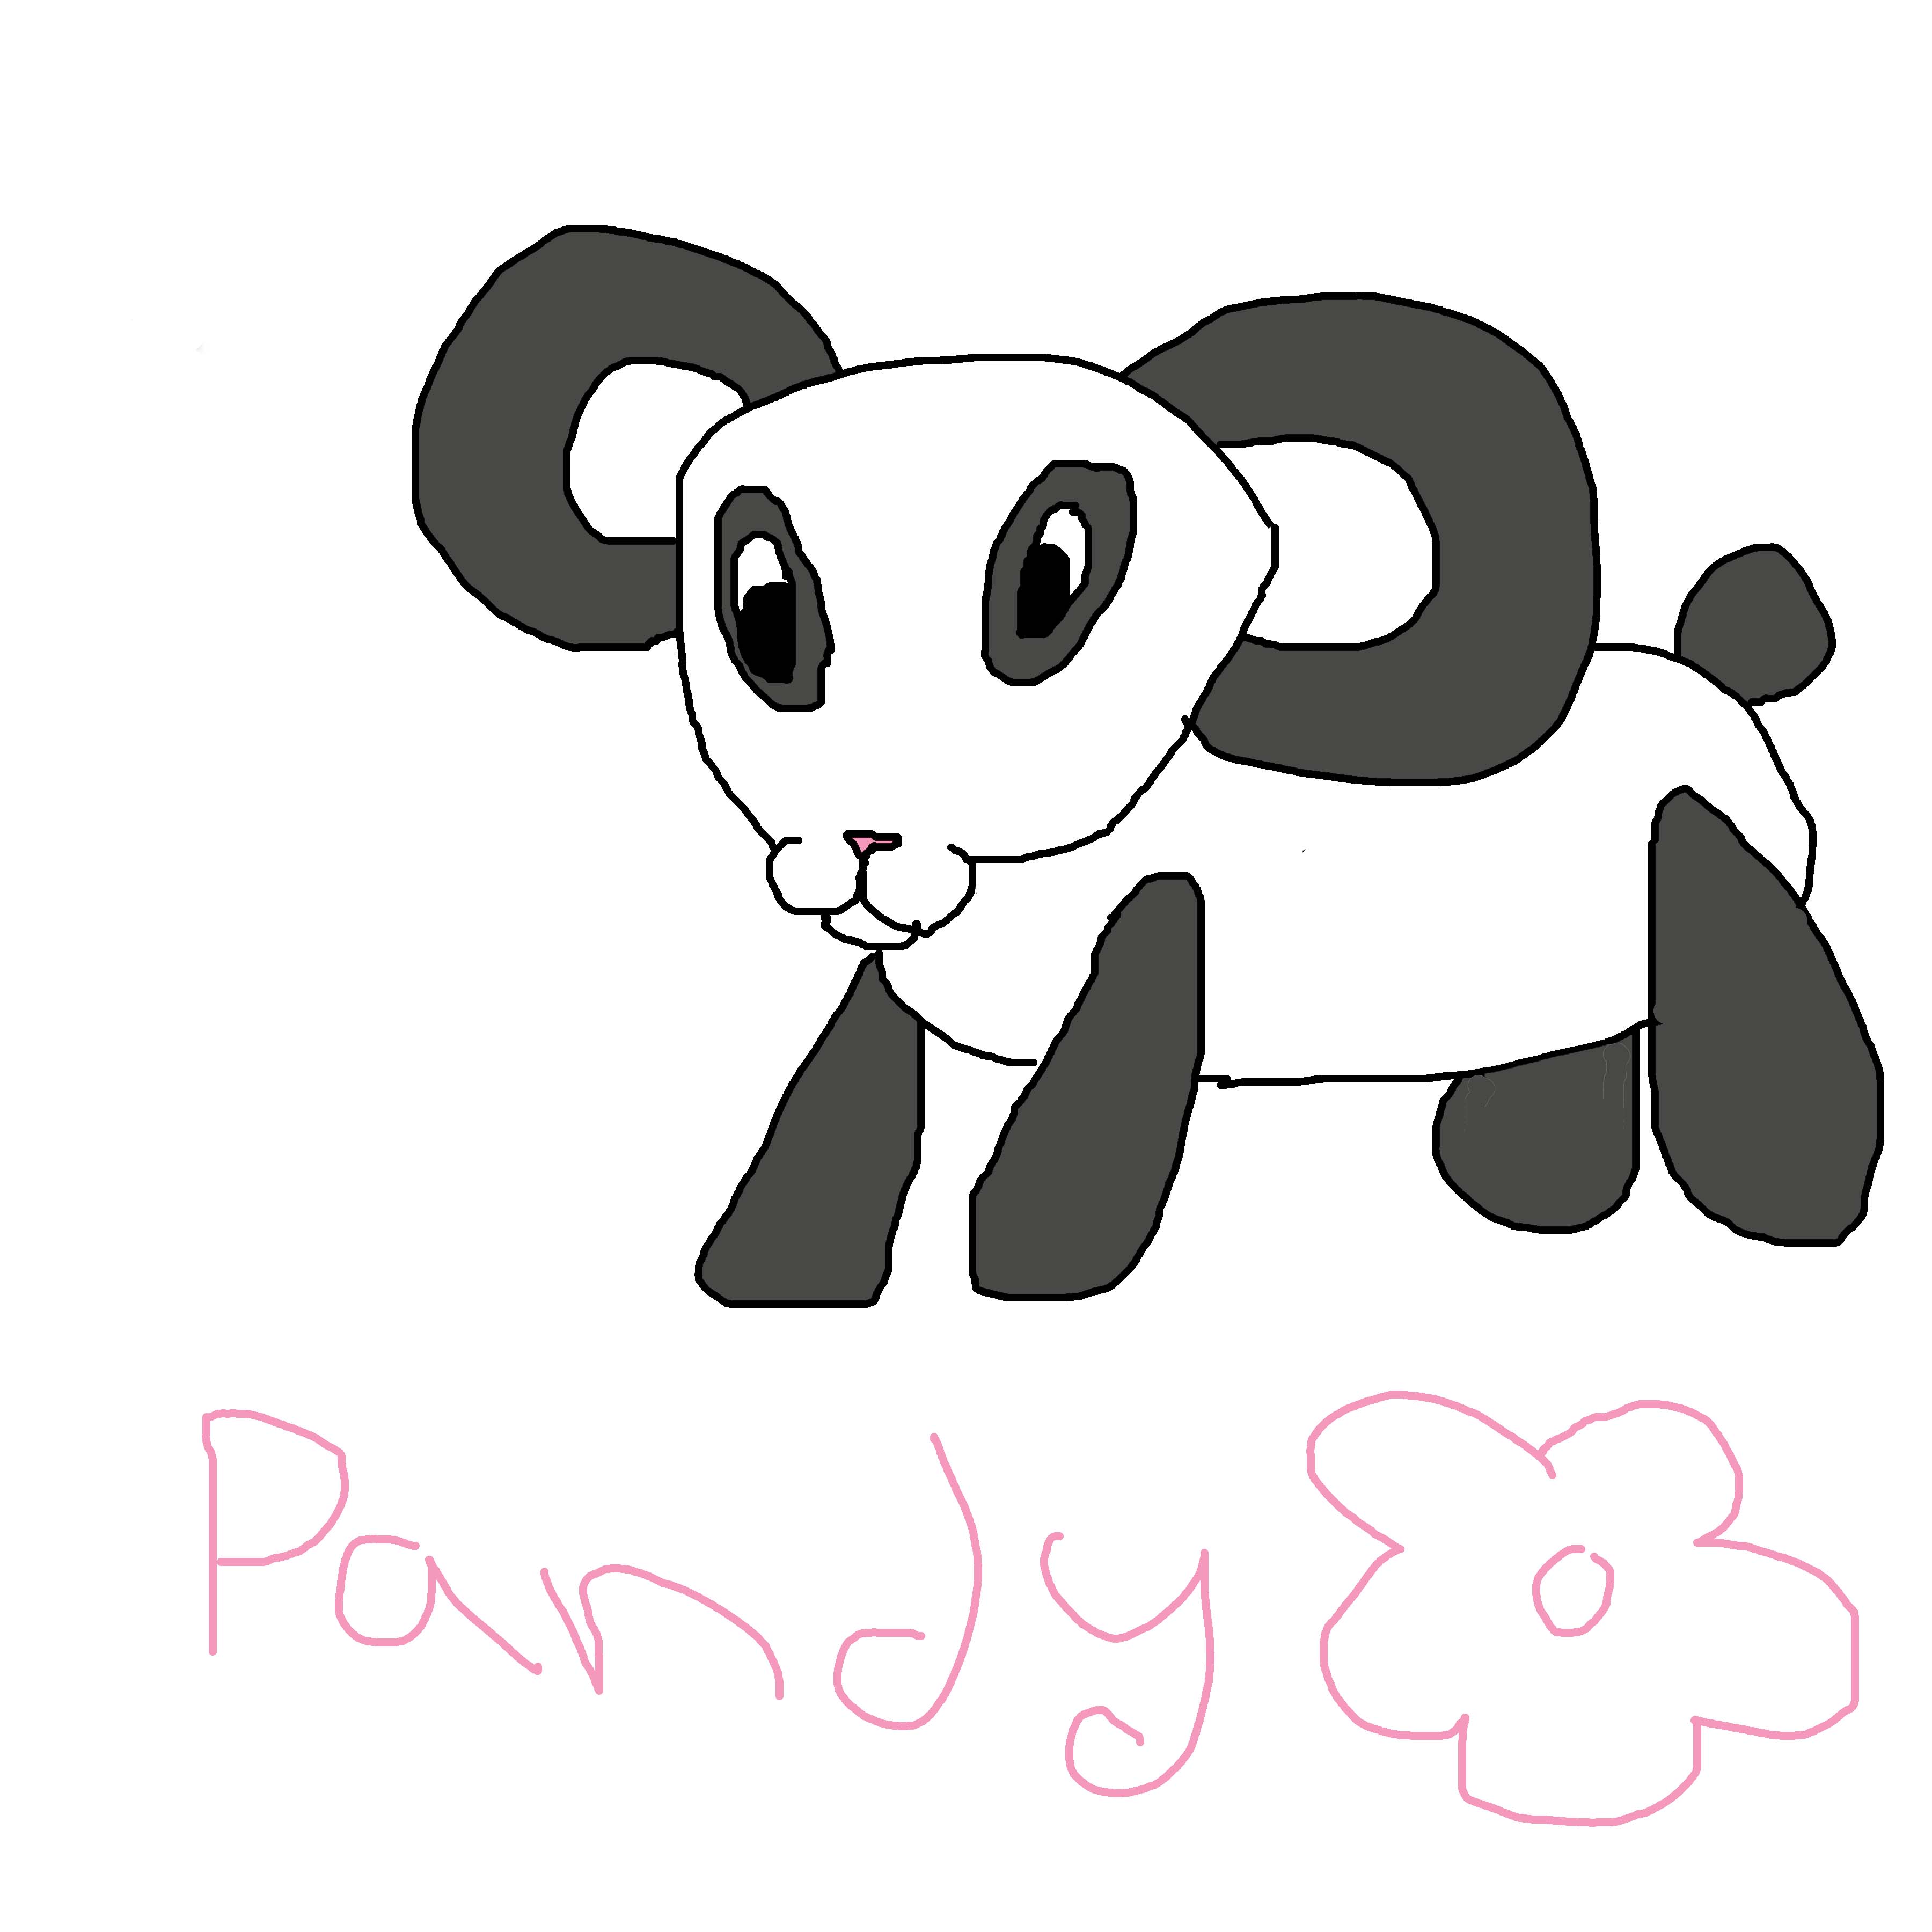 pandy by sam01